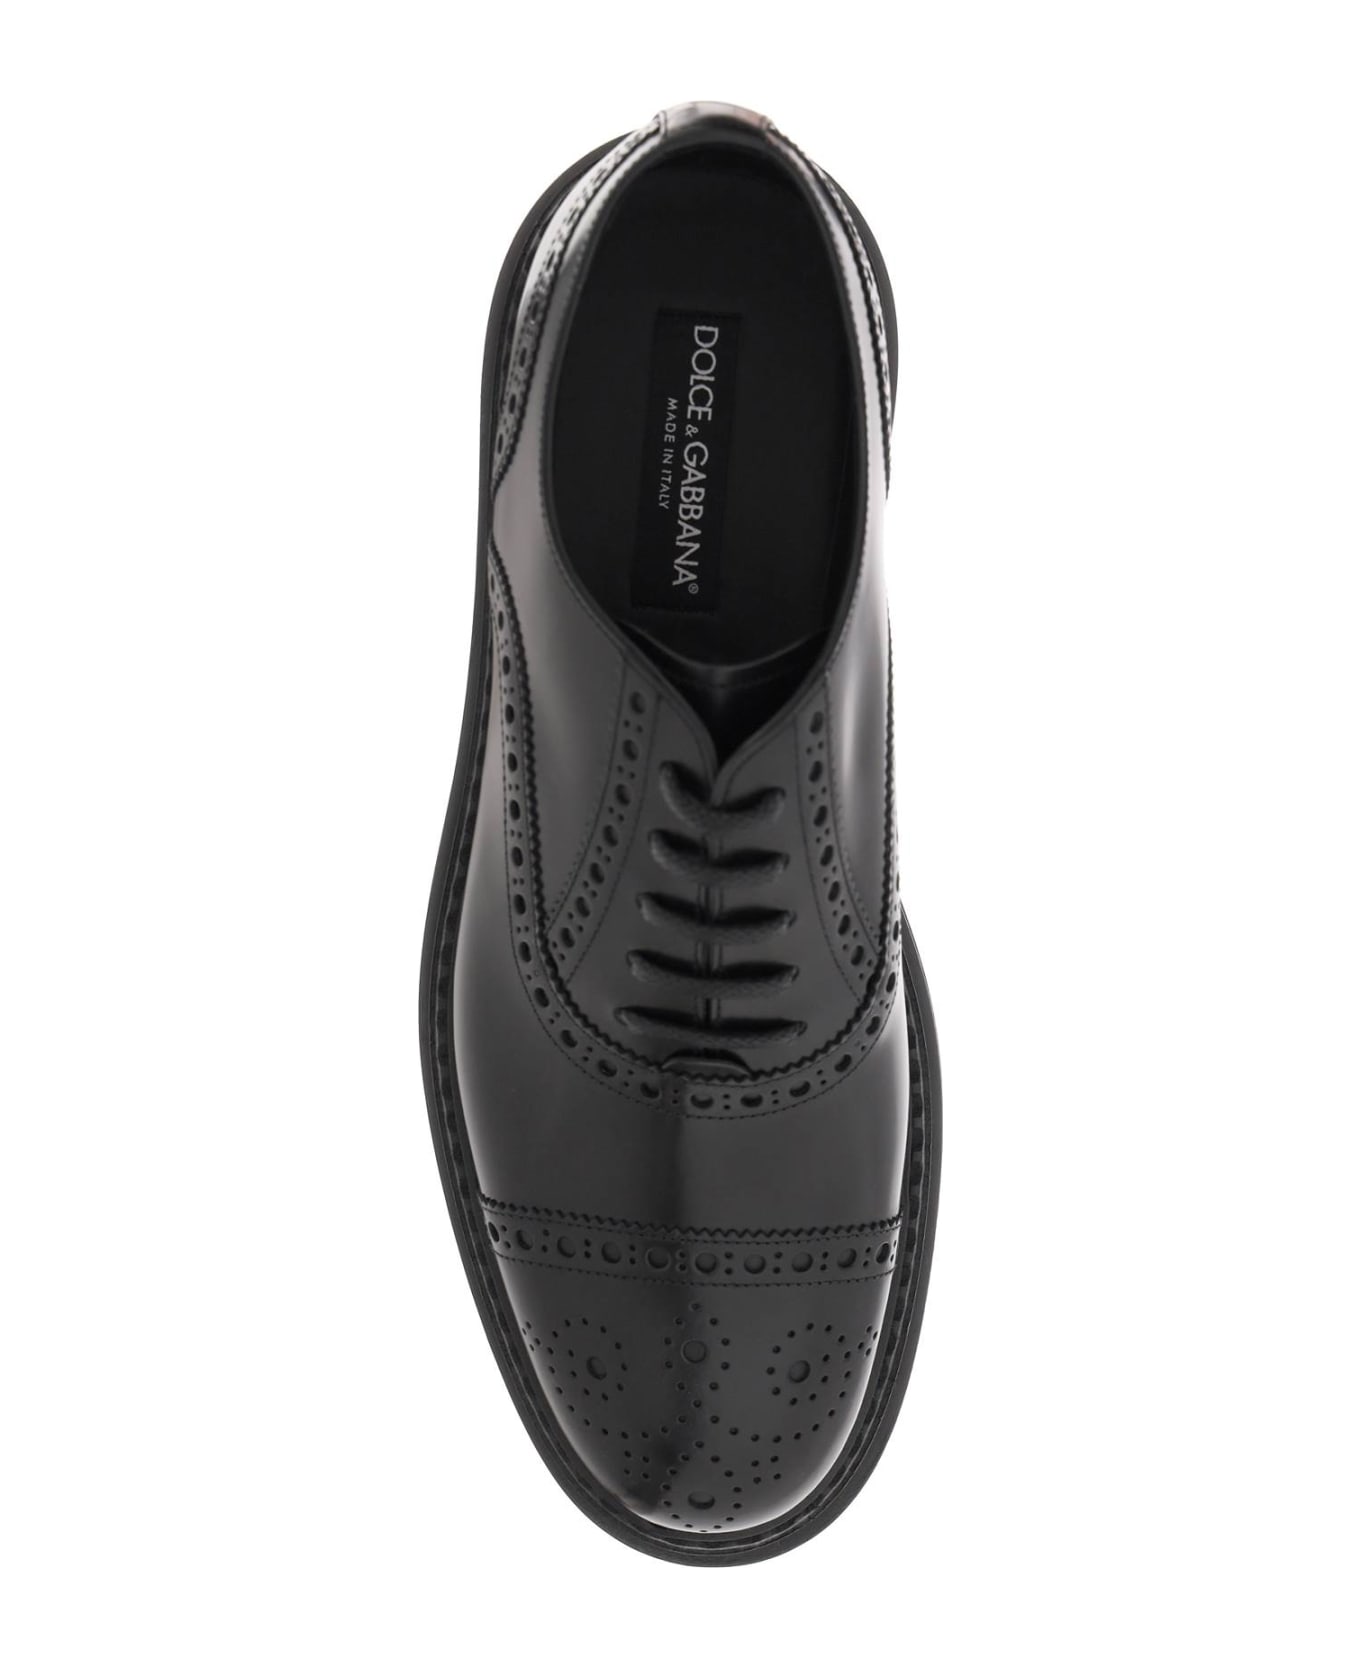 Dolce & Gabbana Leather Lace Up Teva Shoes - Black